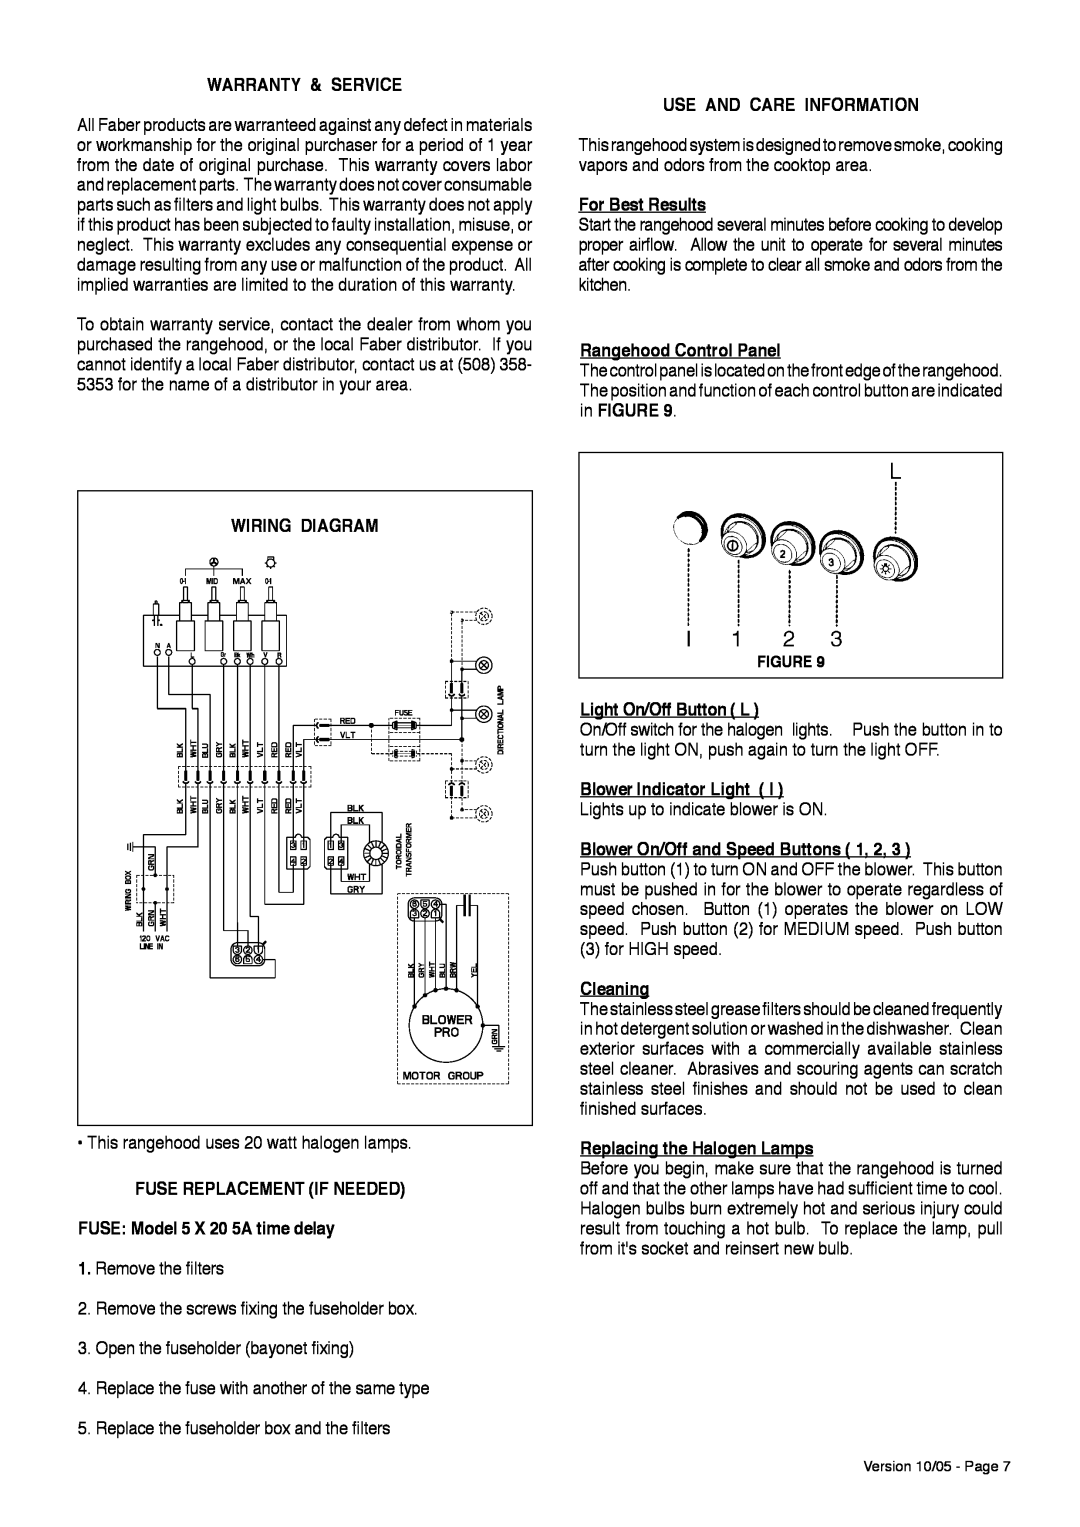 Faber PELLICANO manual Warranty & Service 